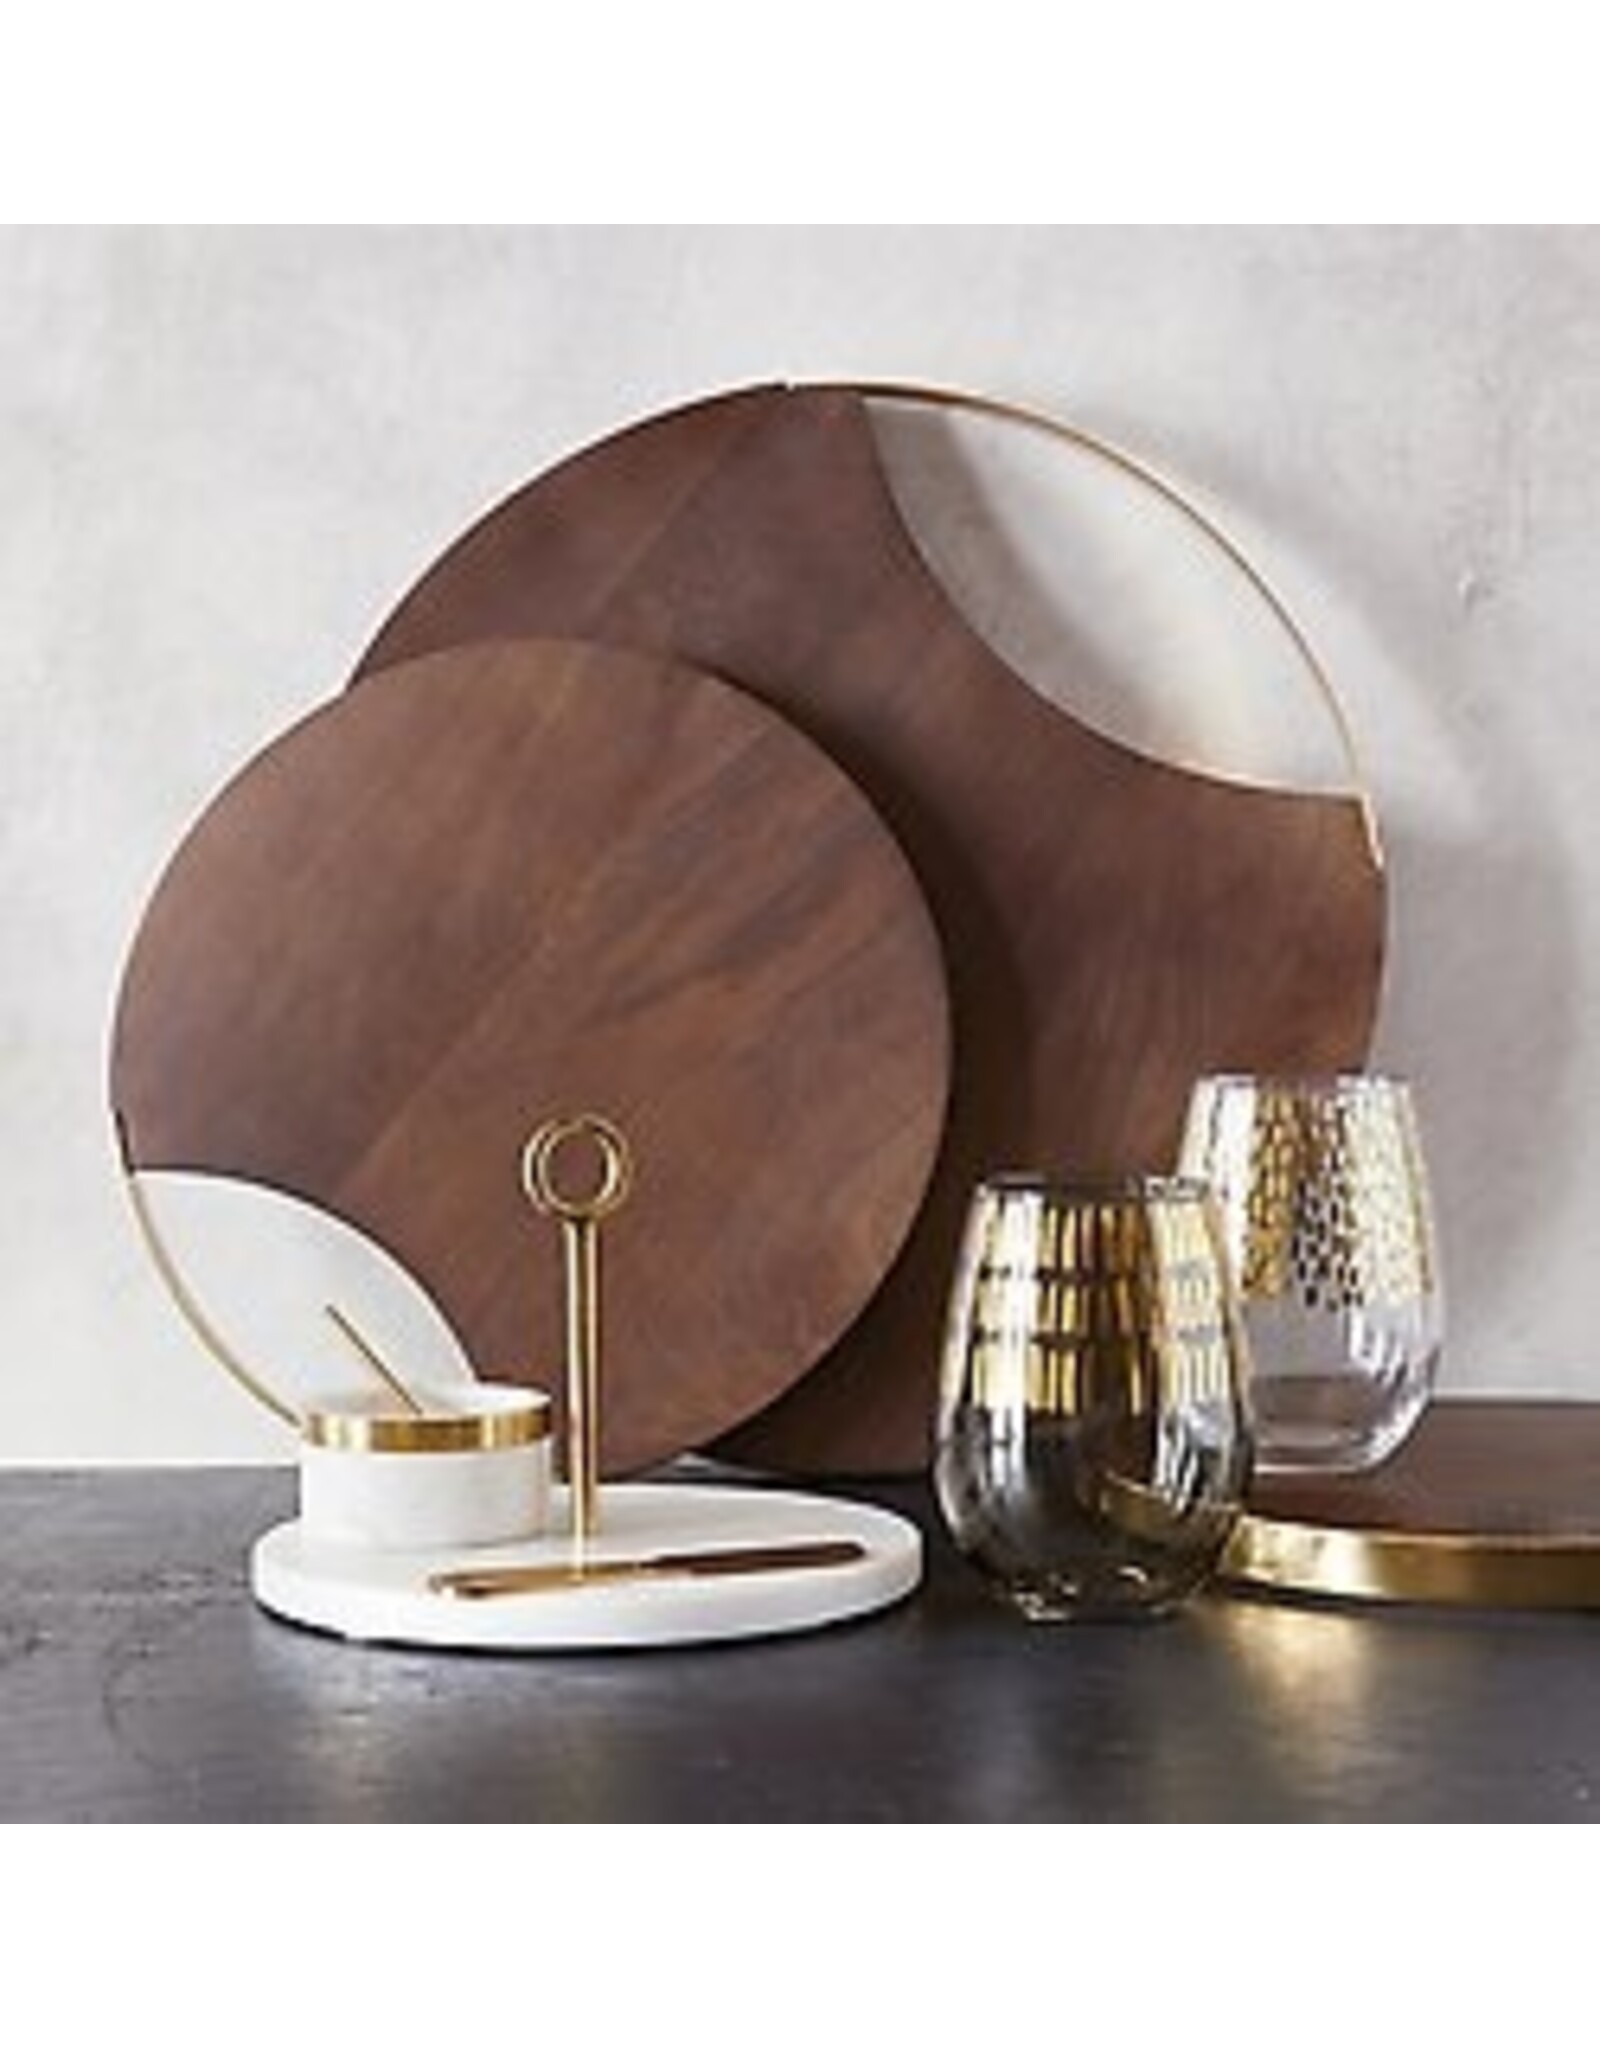 Santa Barbara Designs Wood + Brass Board